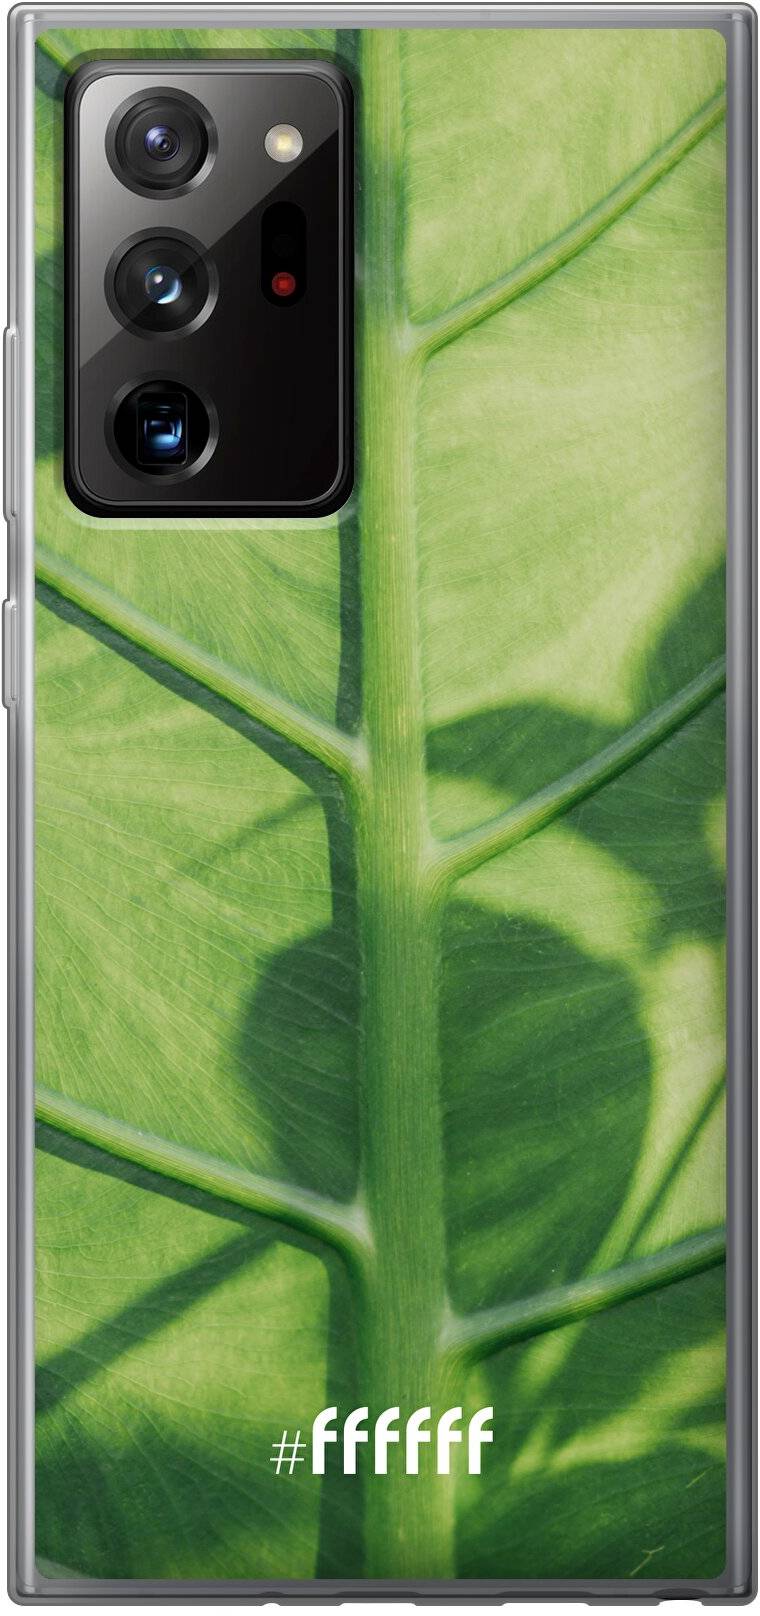 Leaves Macro Galaxy Note 20 Ultra